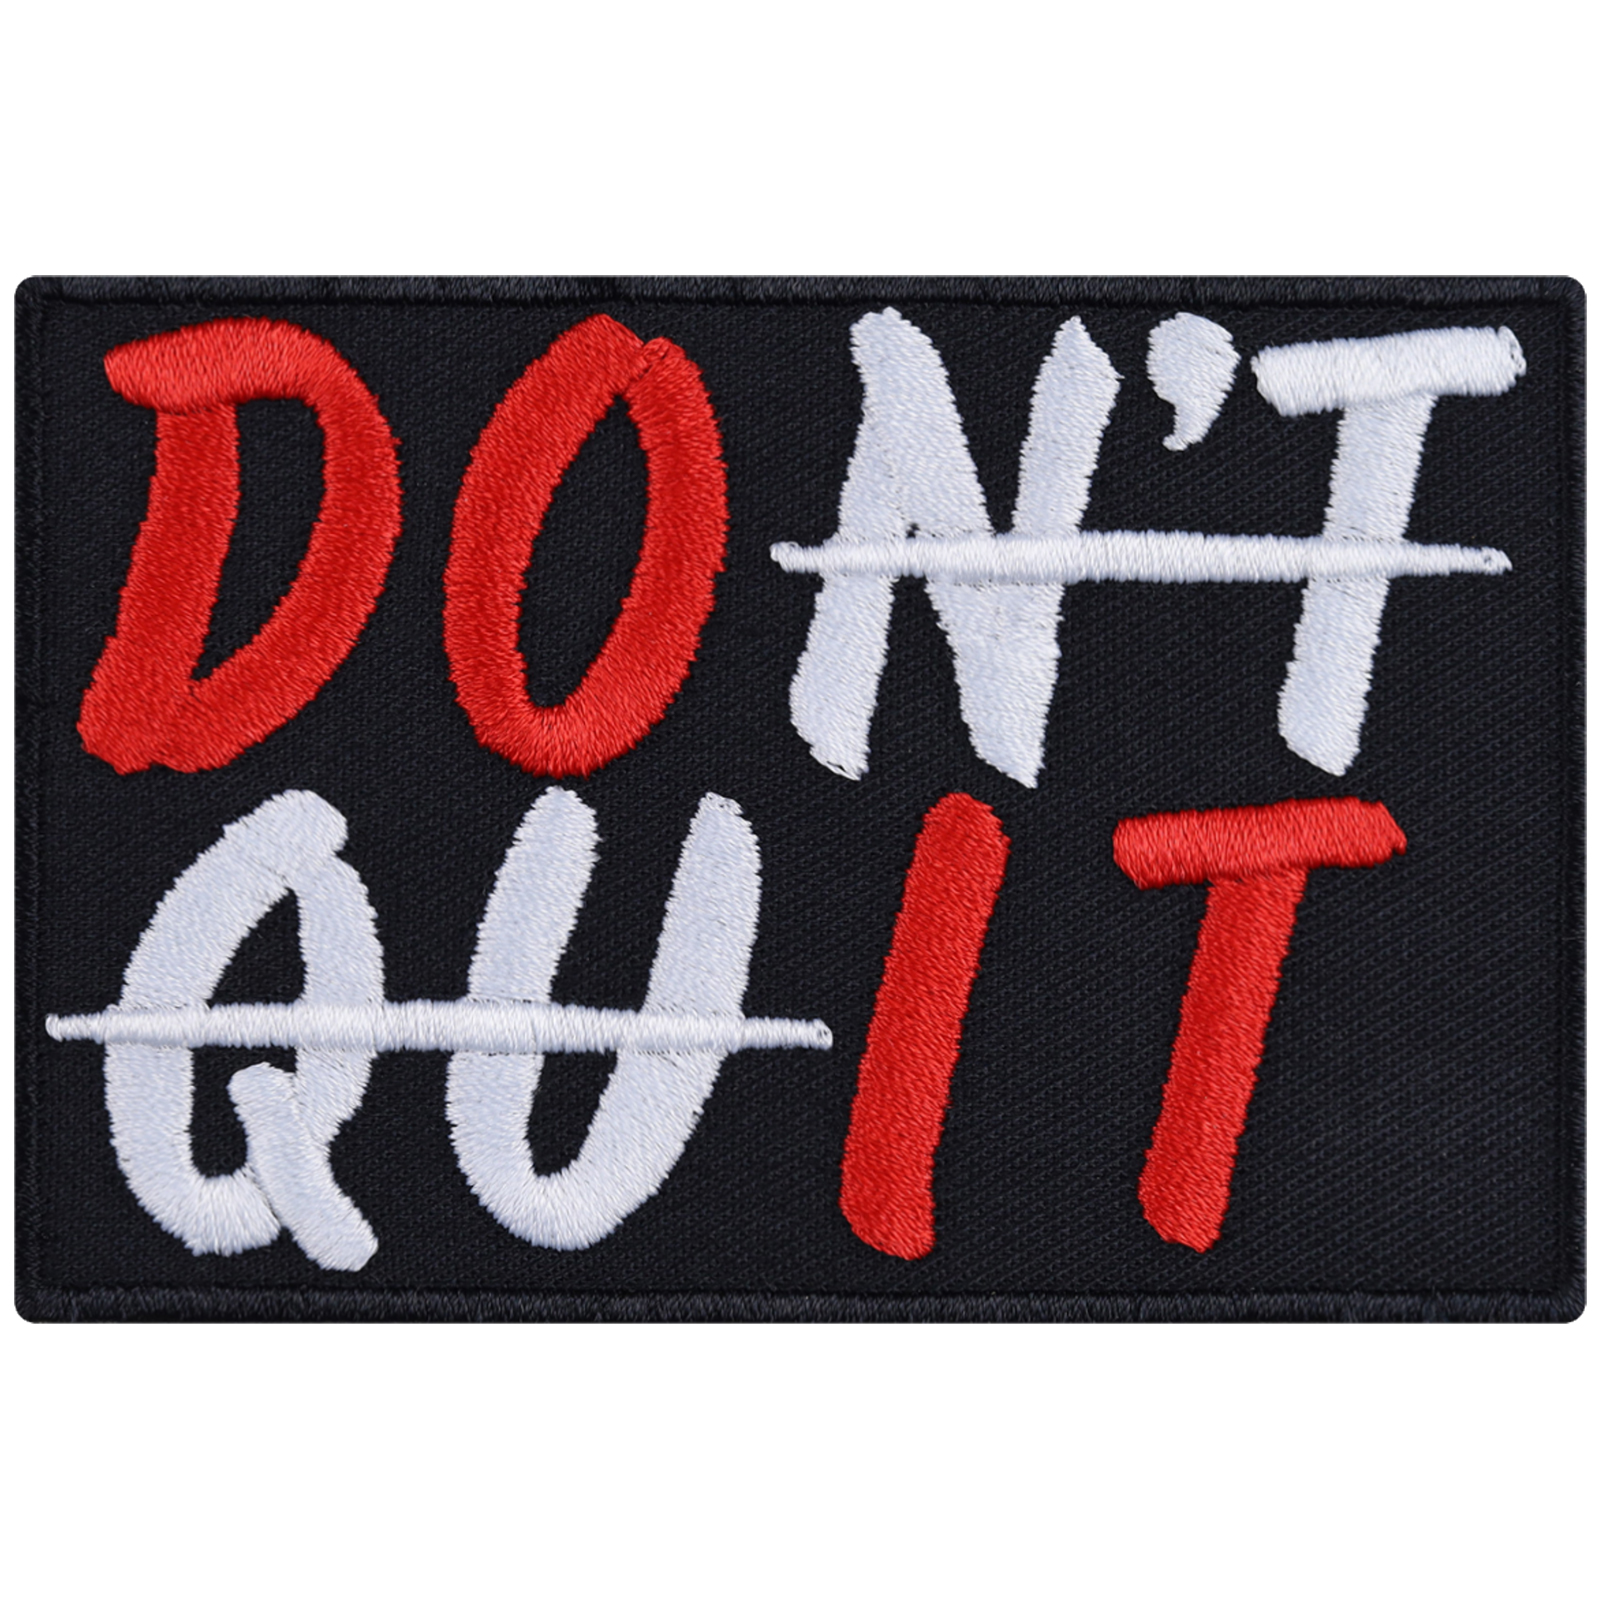 Don't quit - Do it - Patch